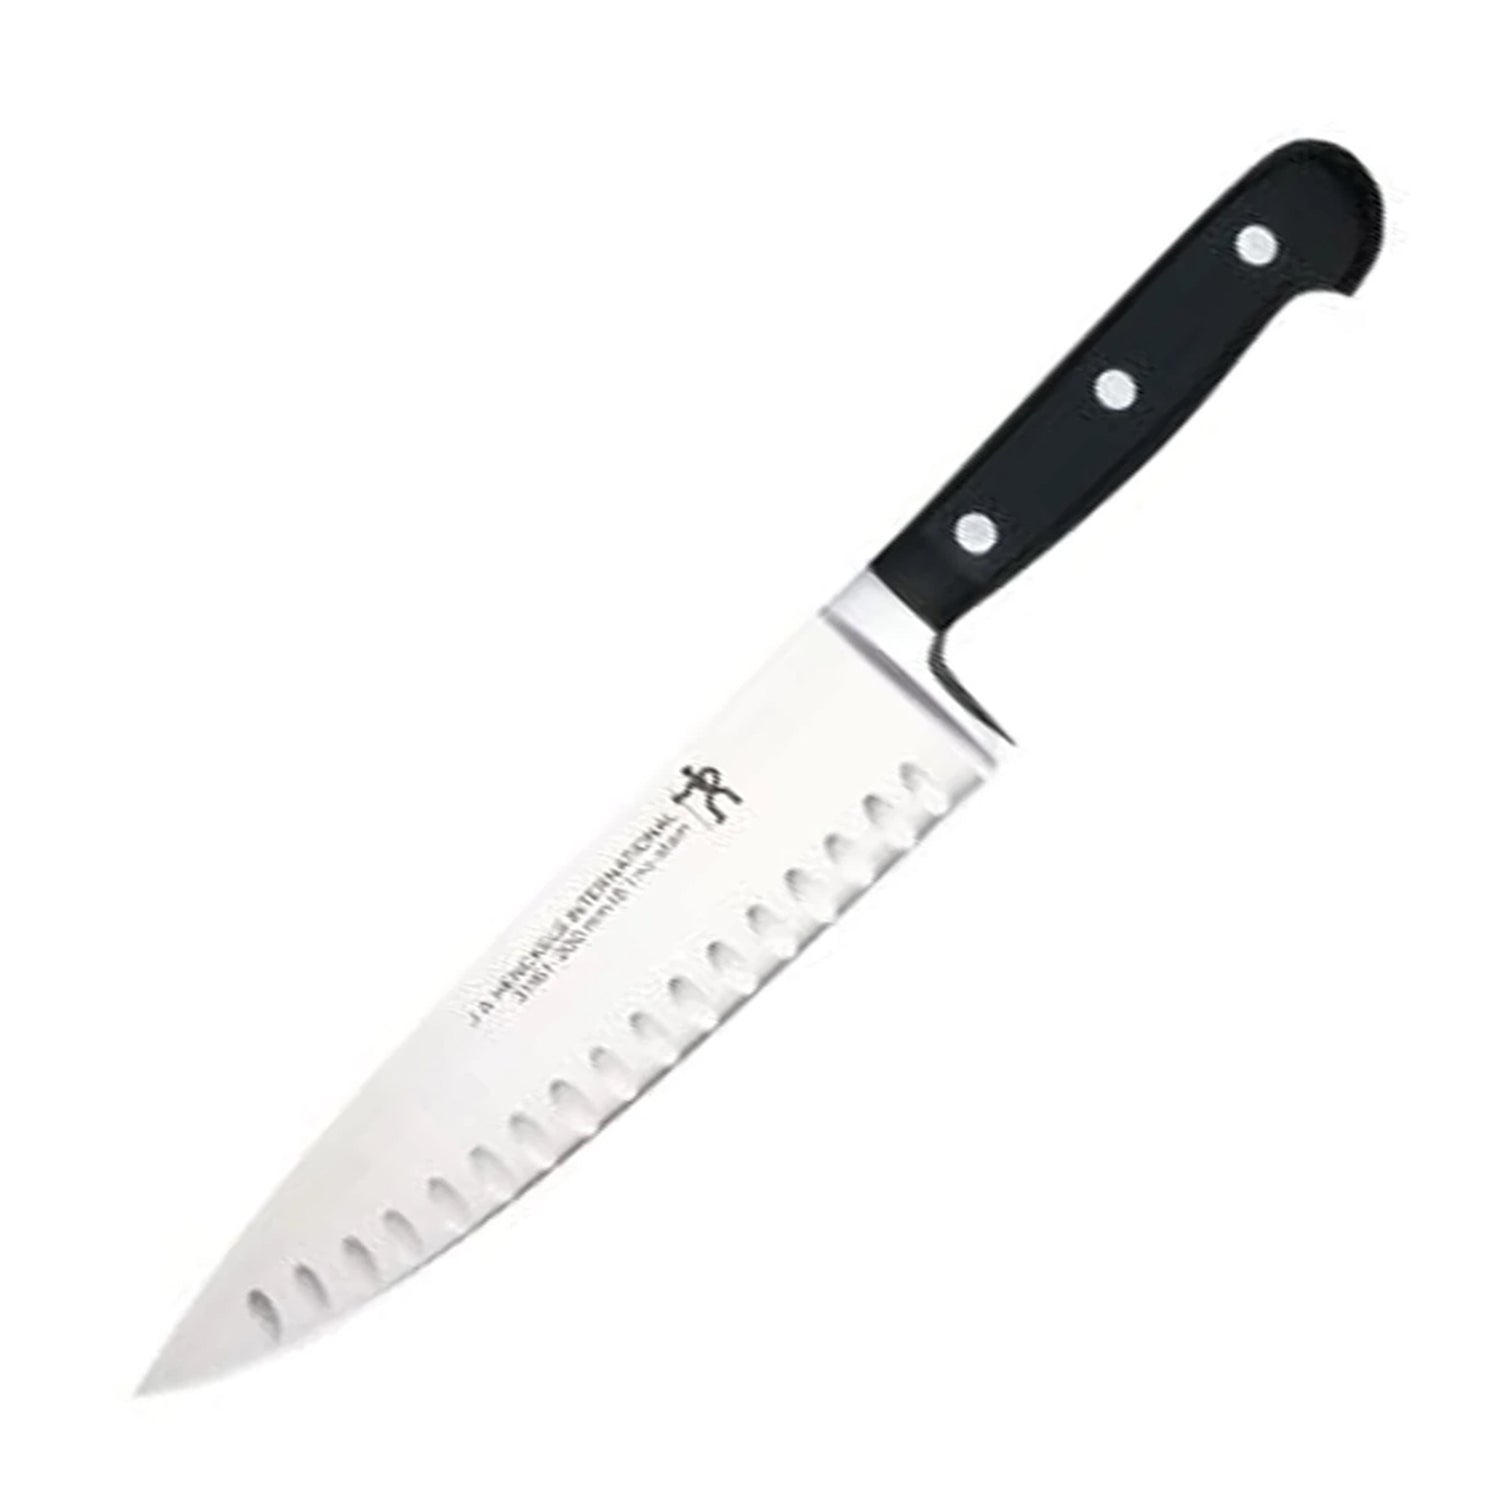  Pampered Chef Nylon Knife #1169 - Straight Edge Knife